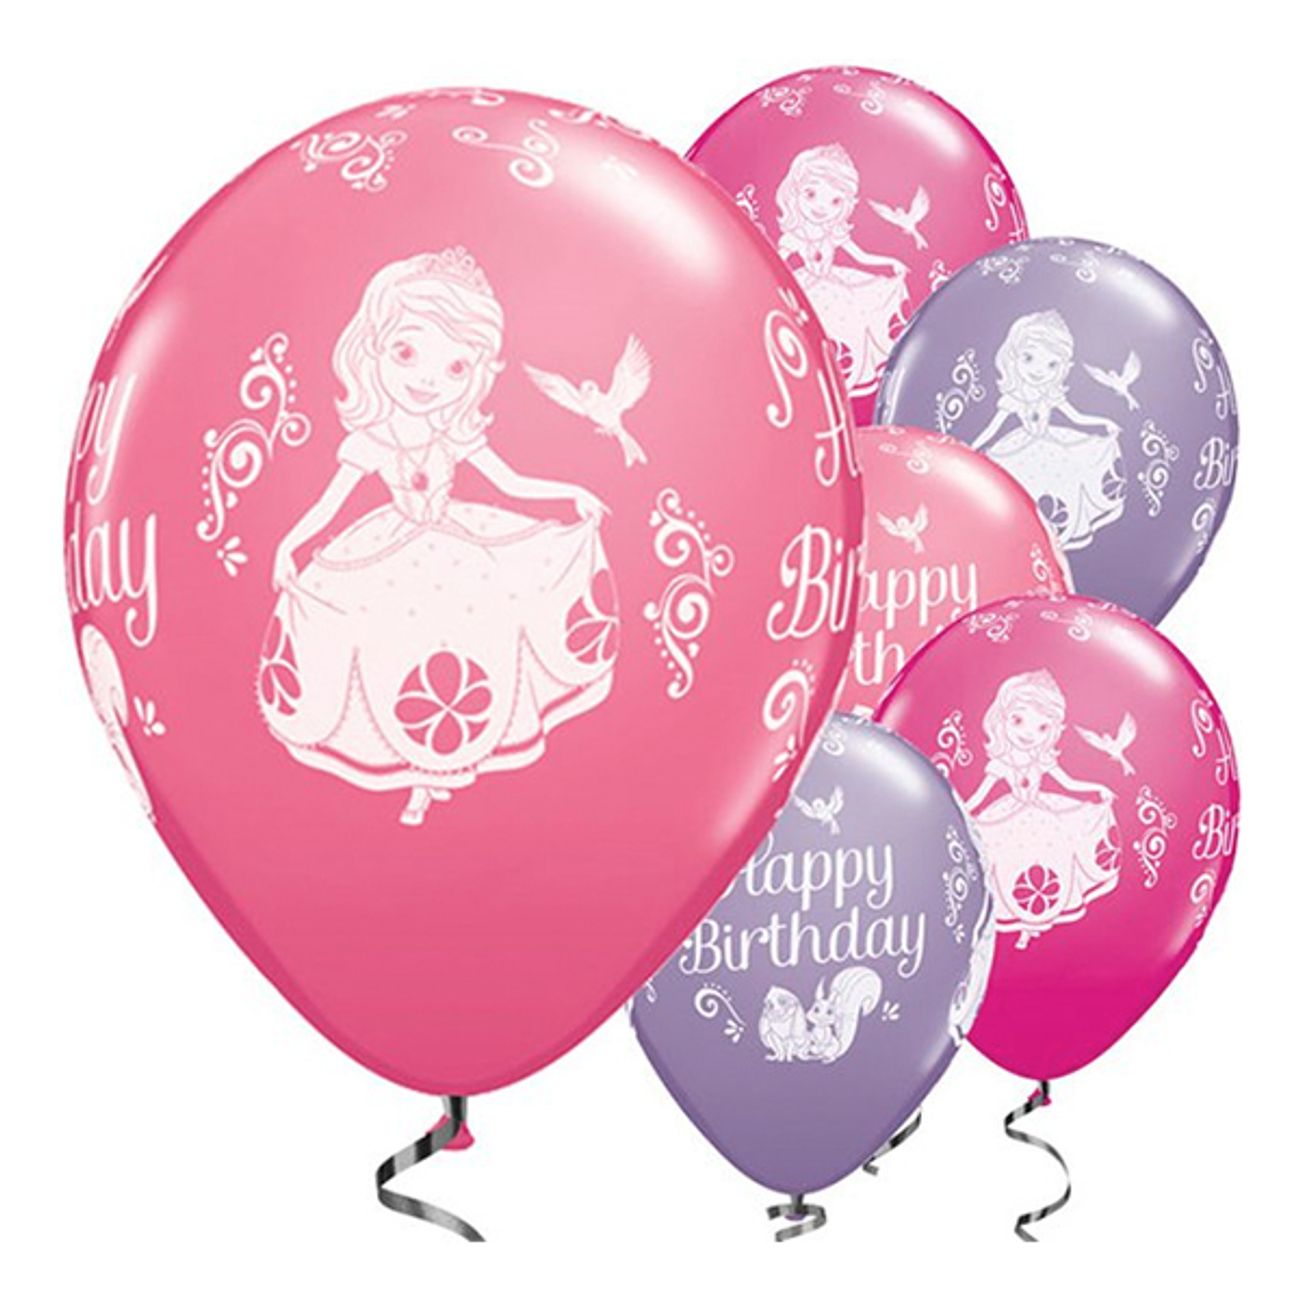 ballonger-happy-birthday-sofia-den-forsta-1